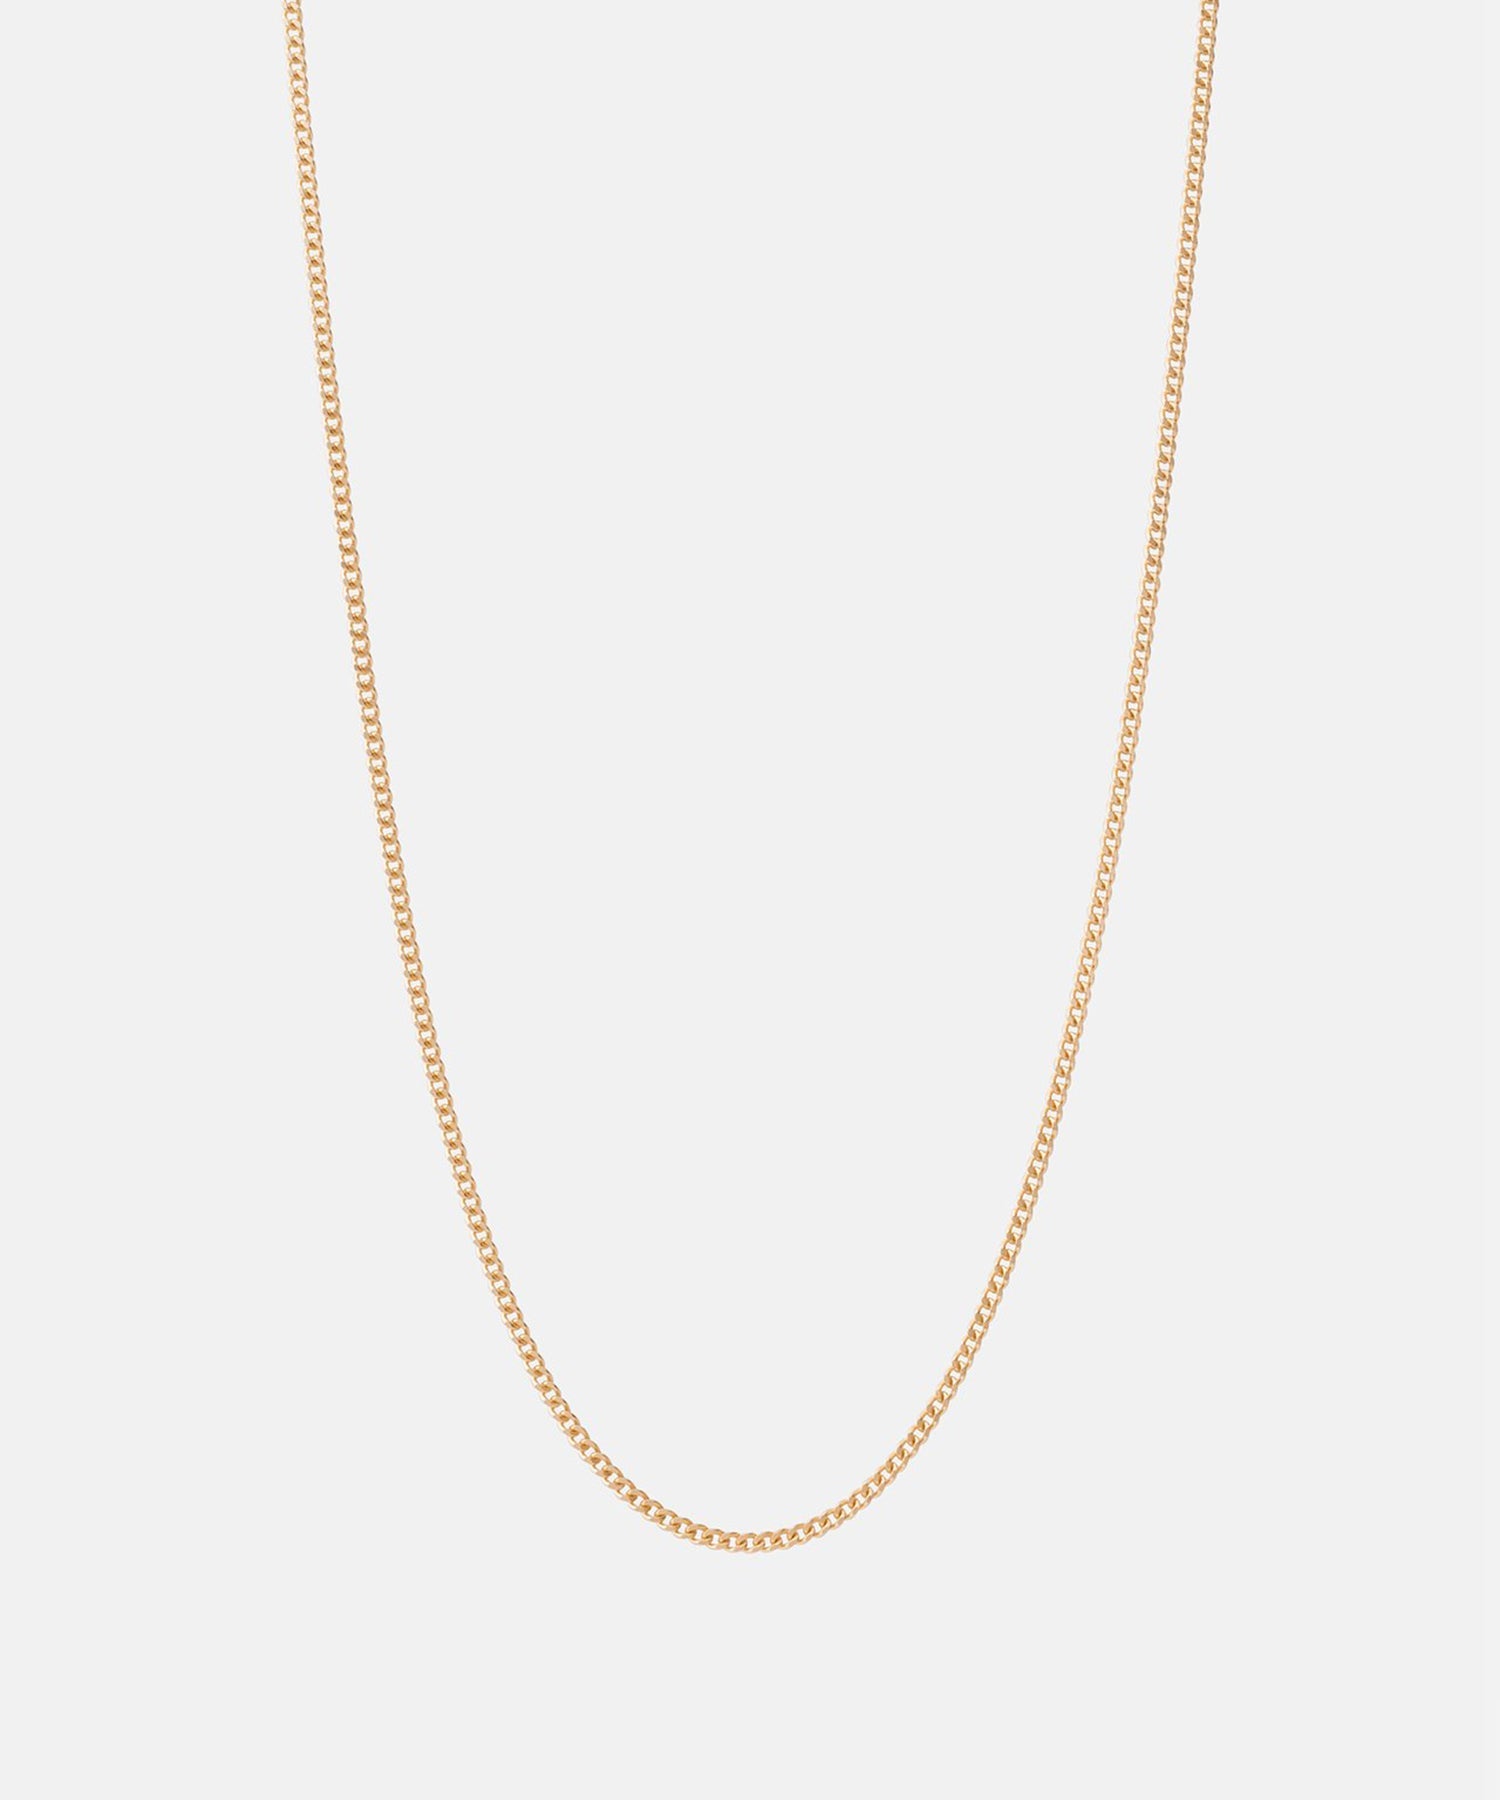 Miansai 2mm Chain Necklace in Gold Vermeil